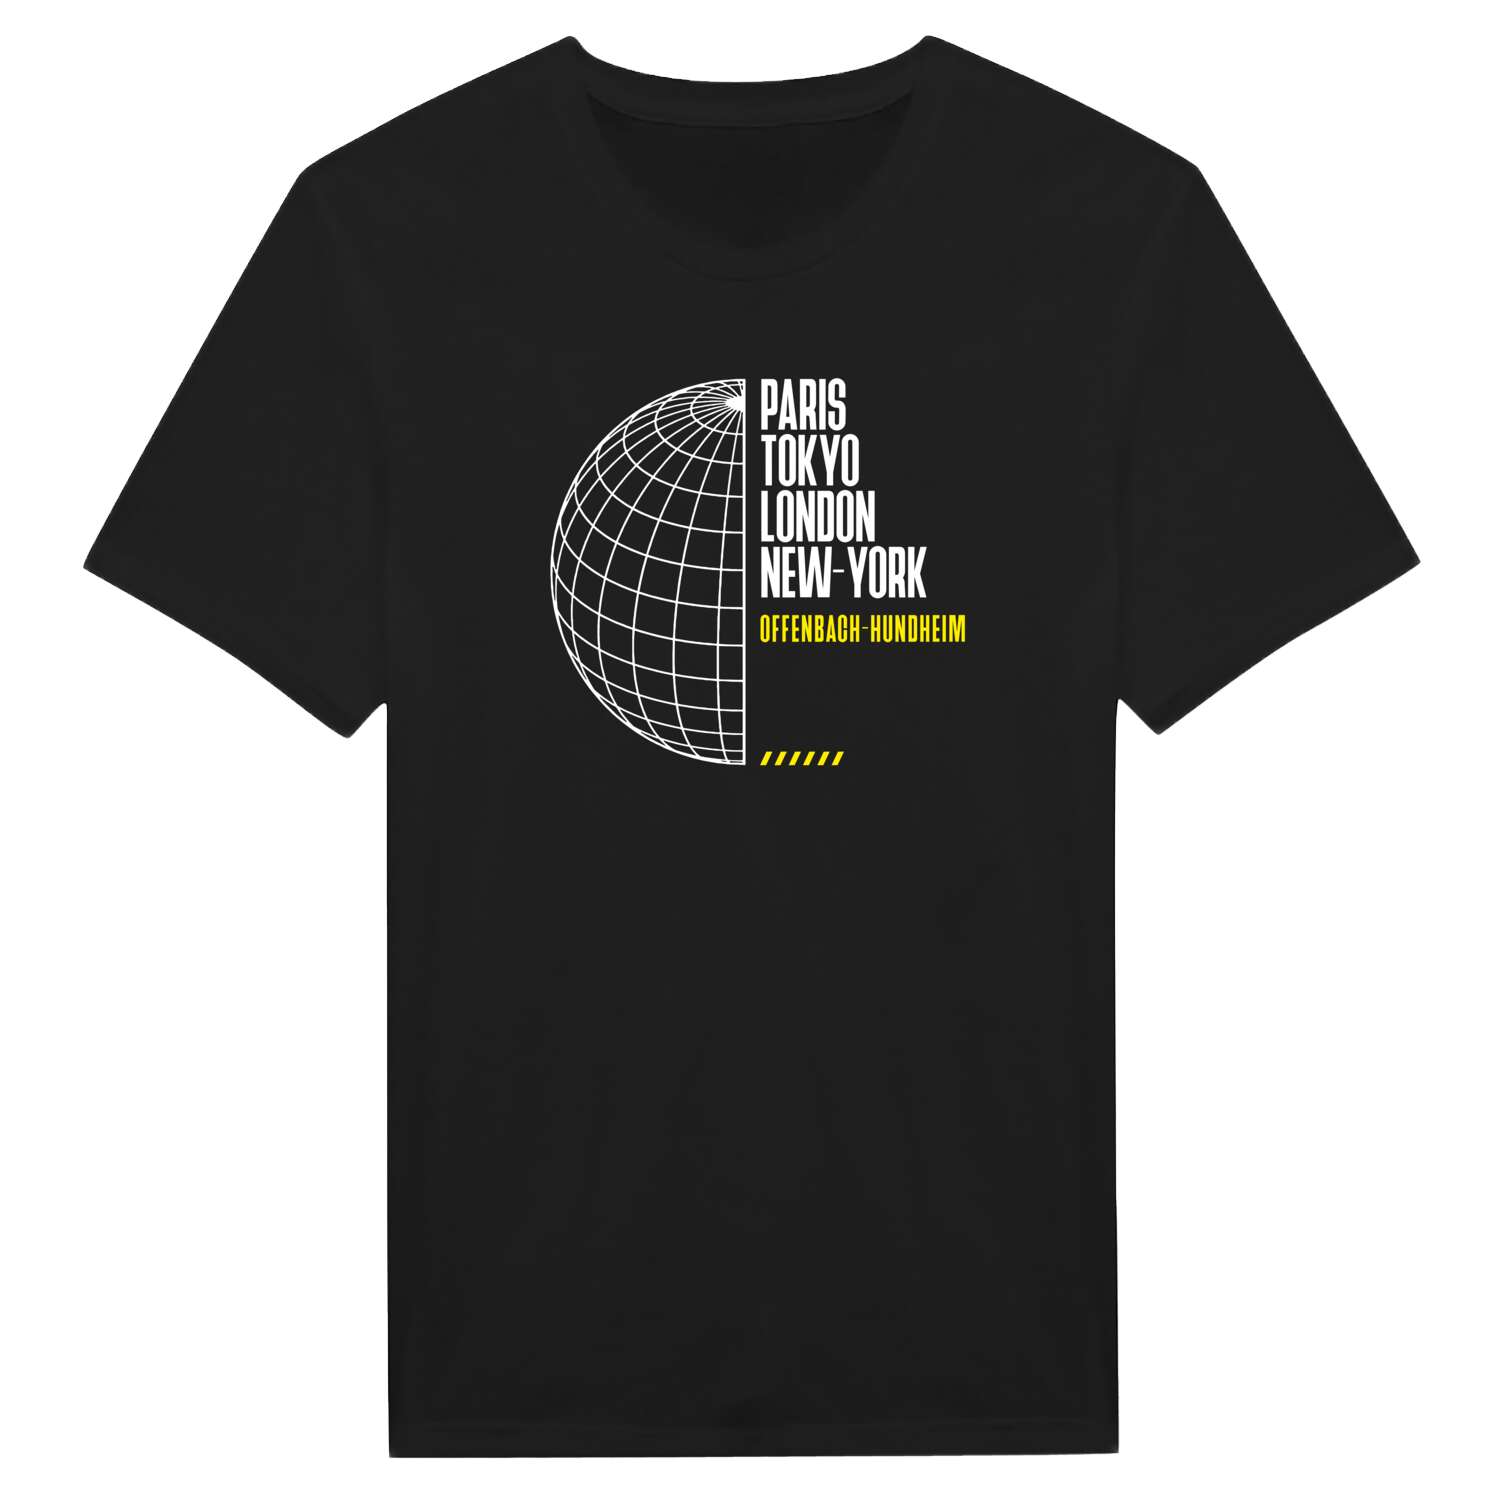 Offenbach-Hundheim T-Shirt »Paris Tokyo London«